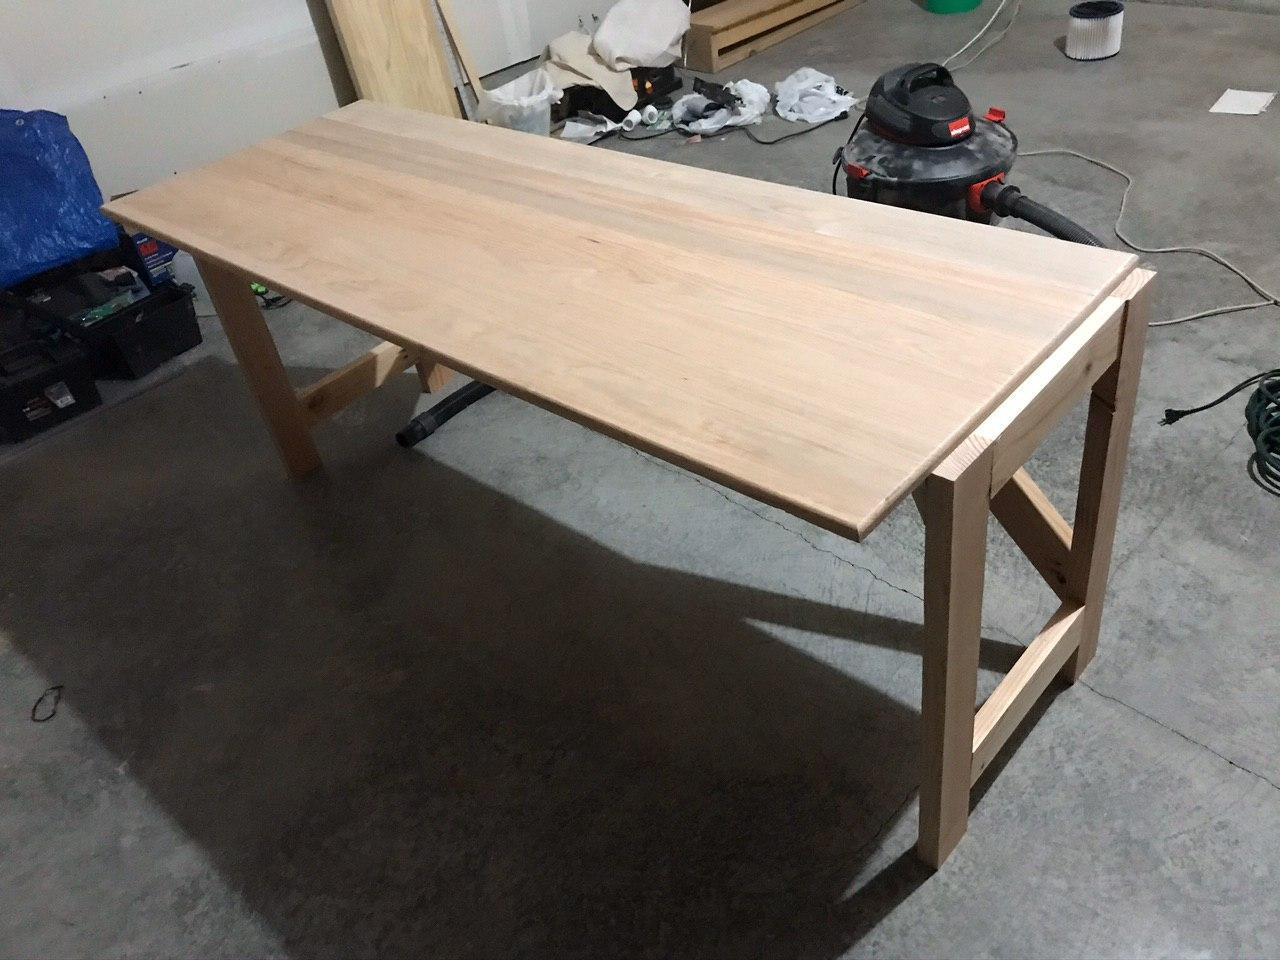 Jointed desk surface on frame